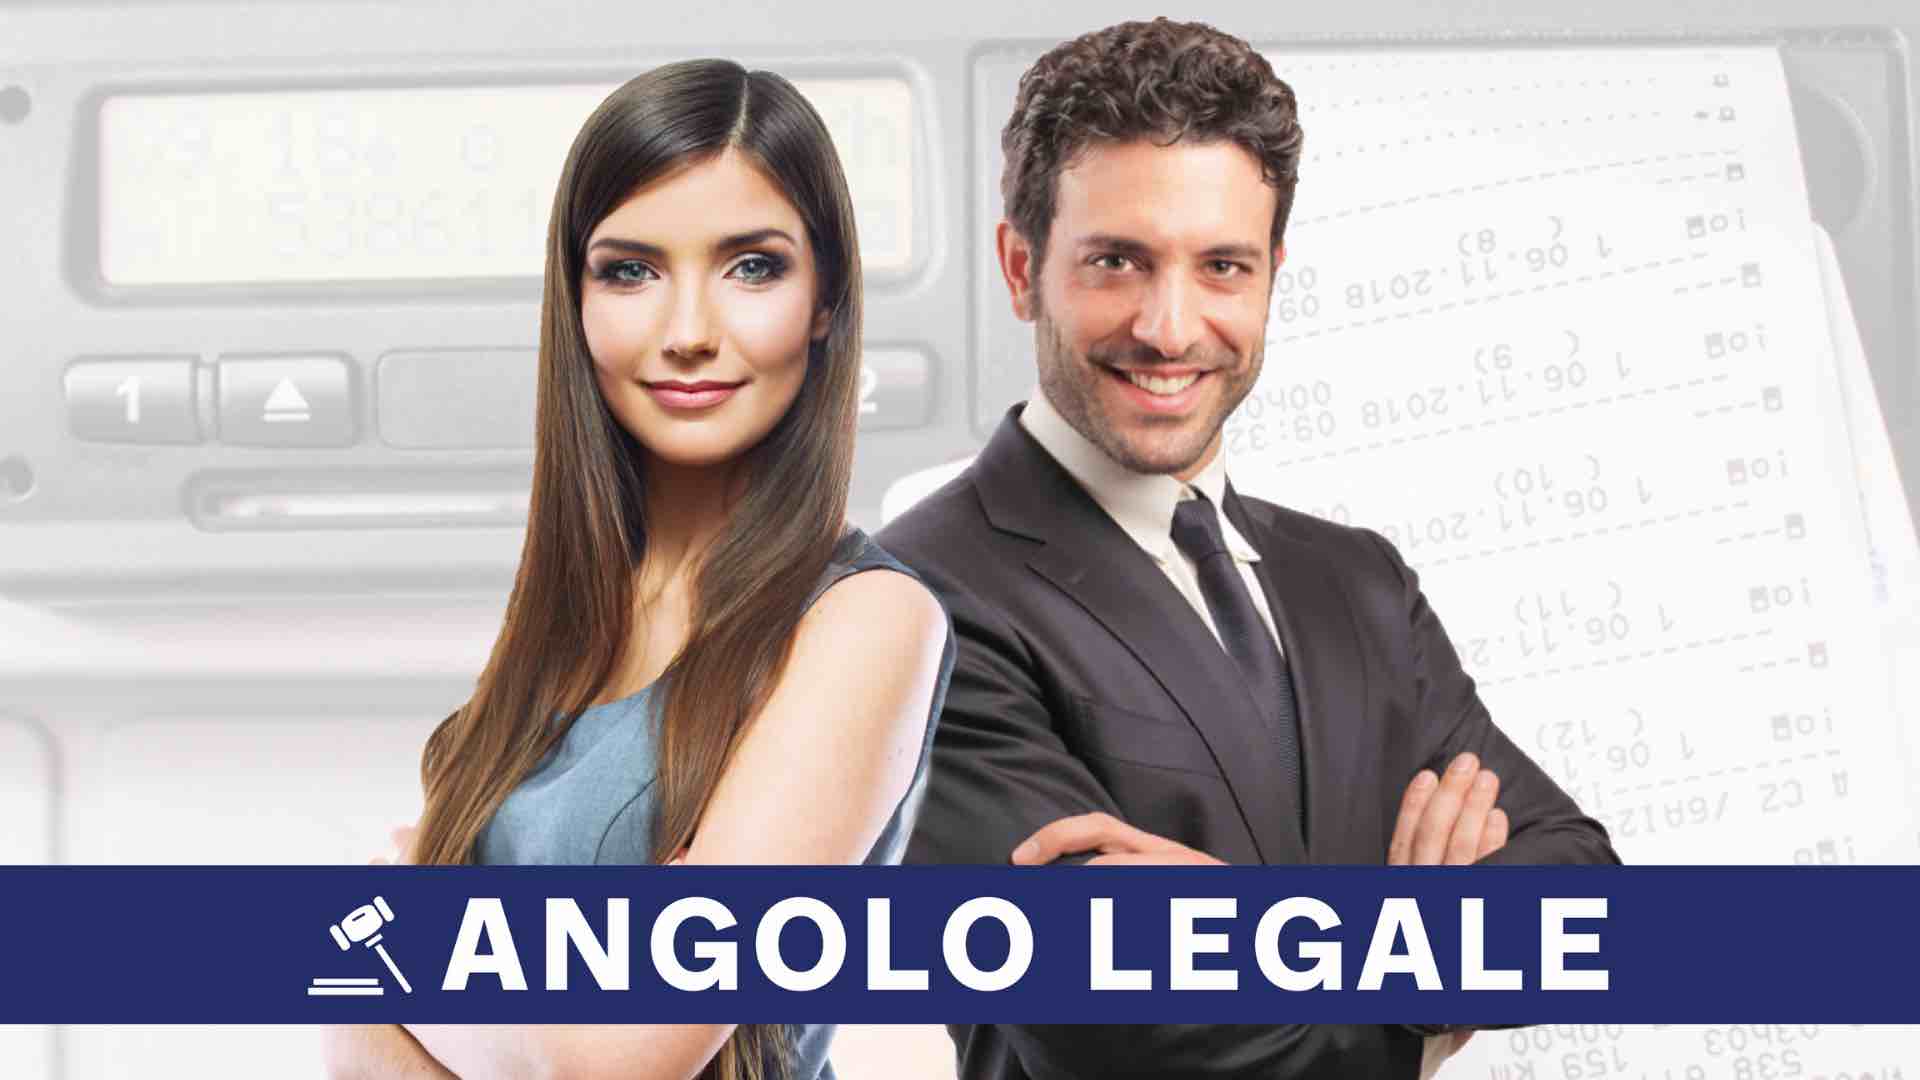 Copy of ANGOLO LEGALE 2